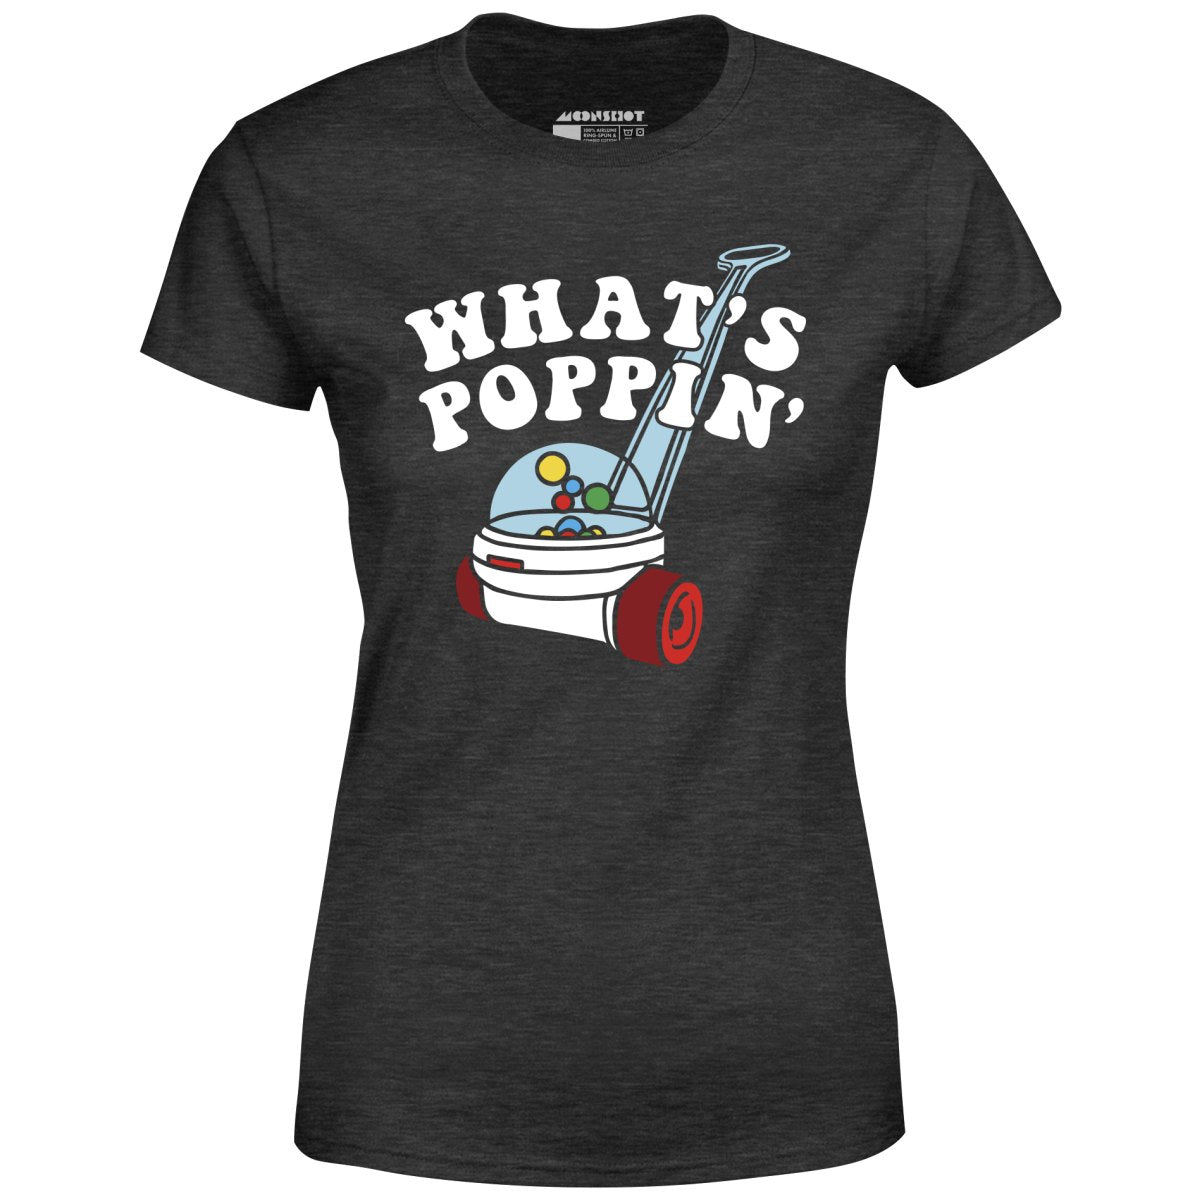 What's Poppin' - Women's T-Shirt